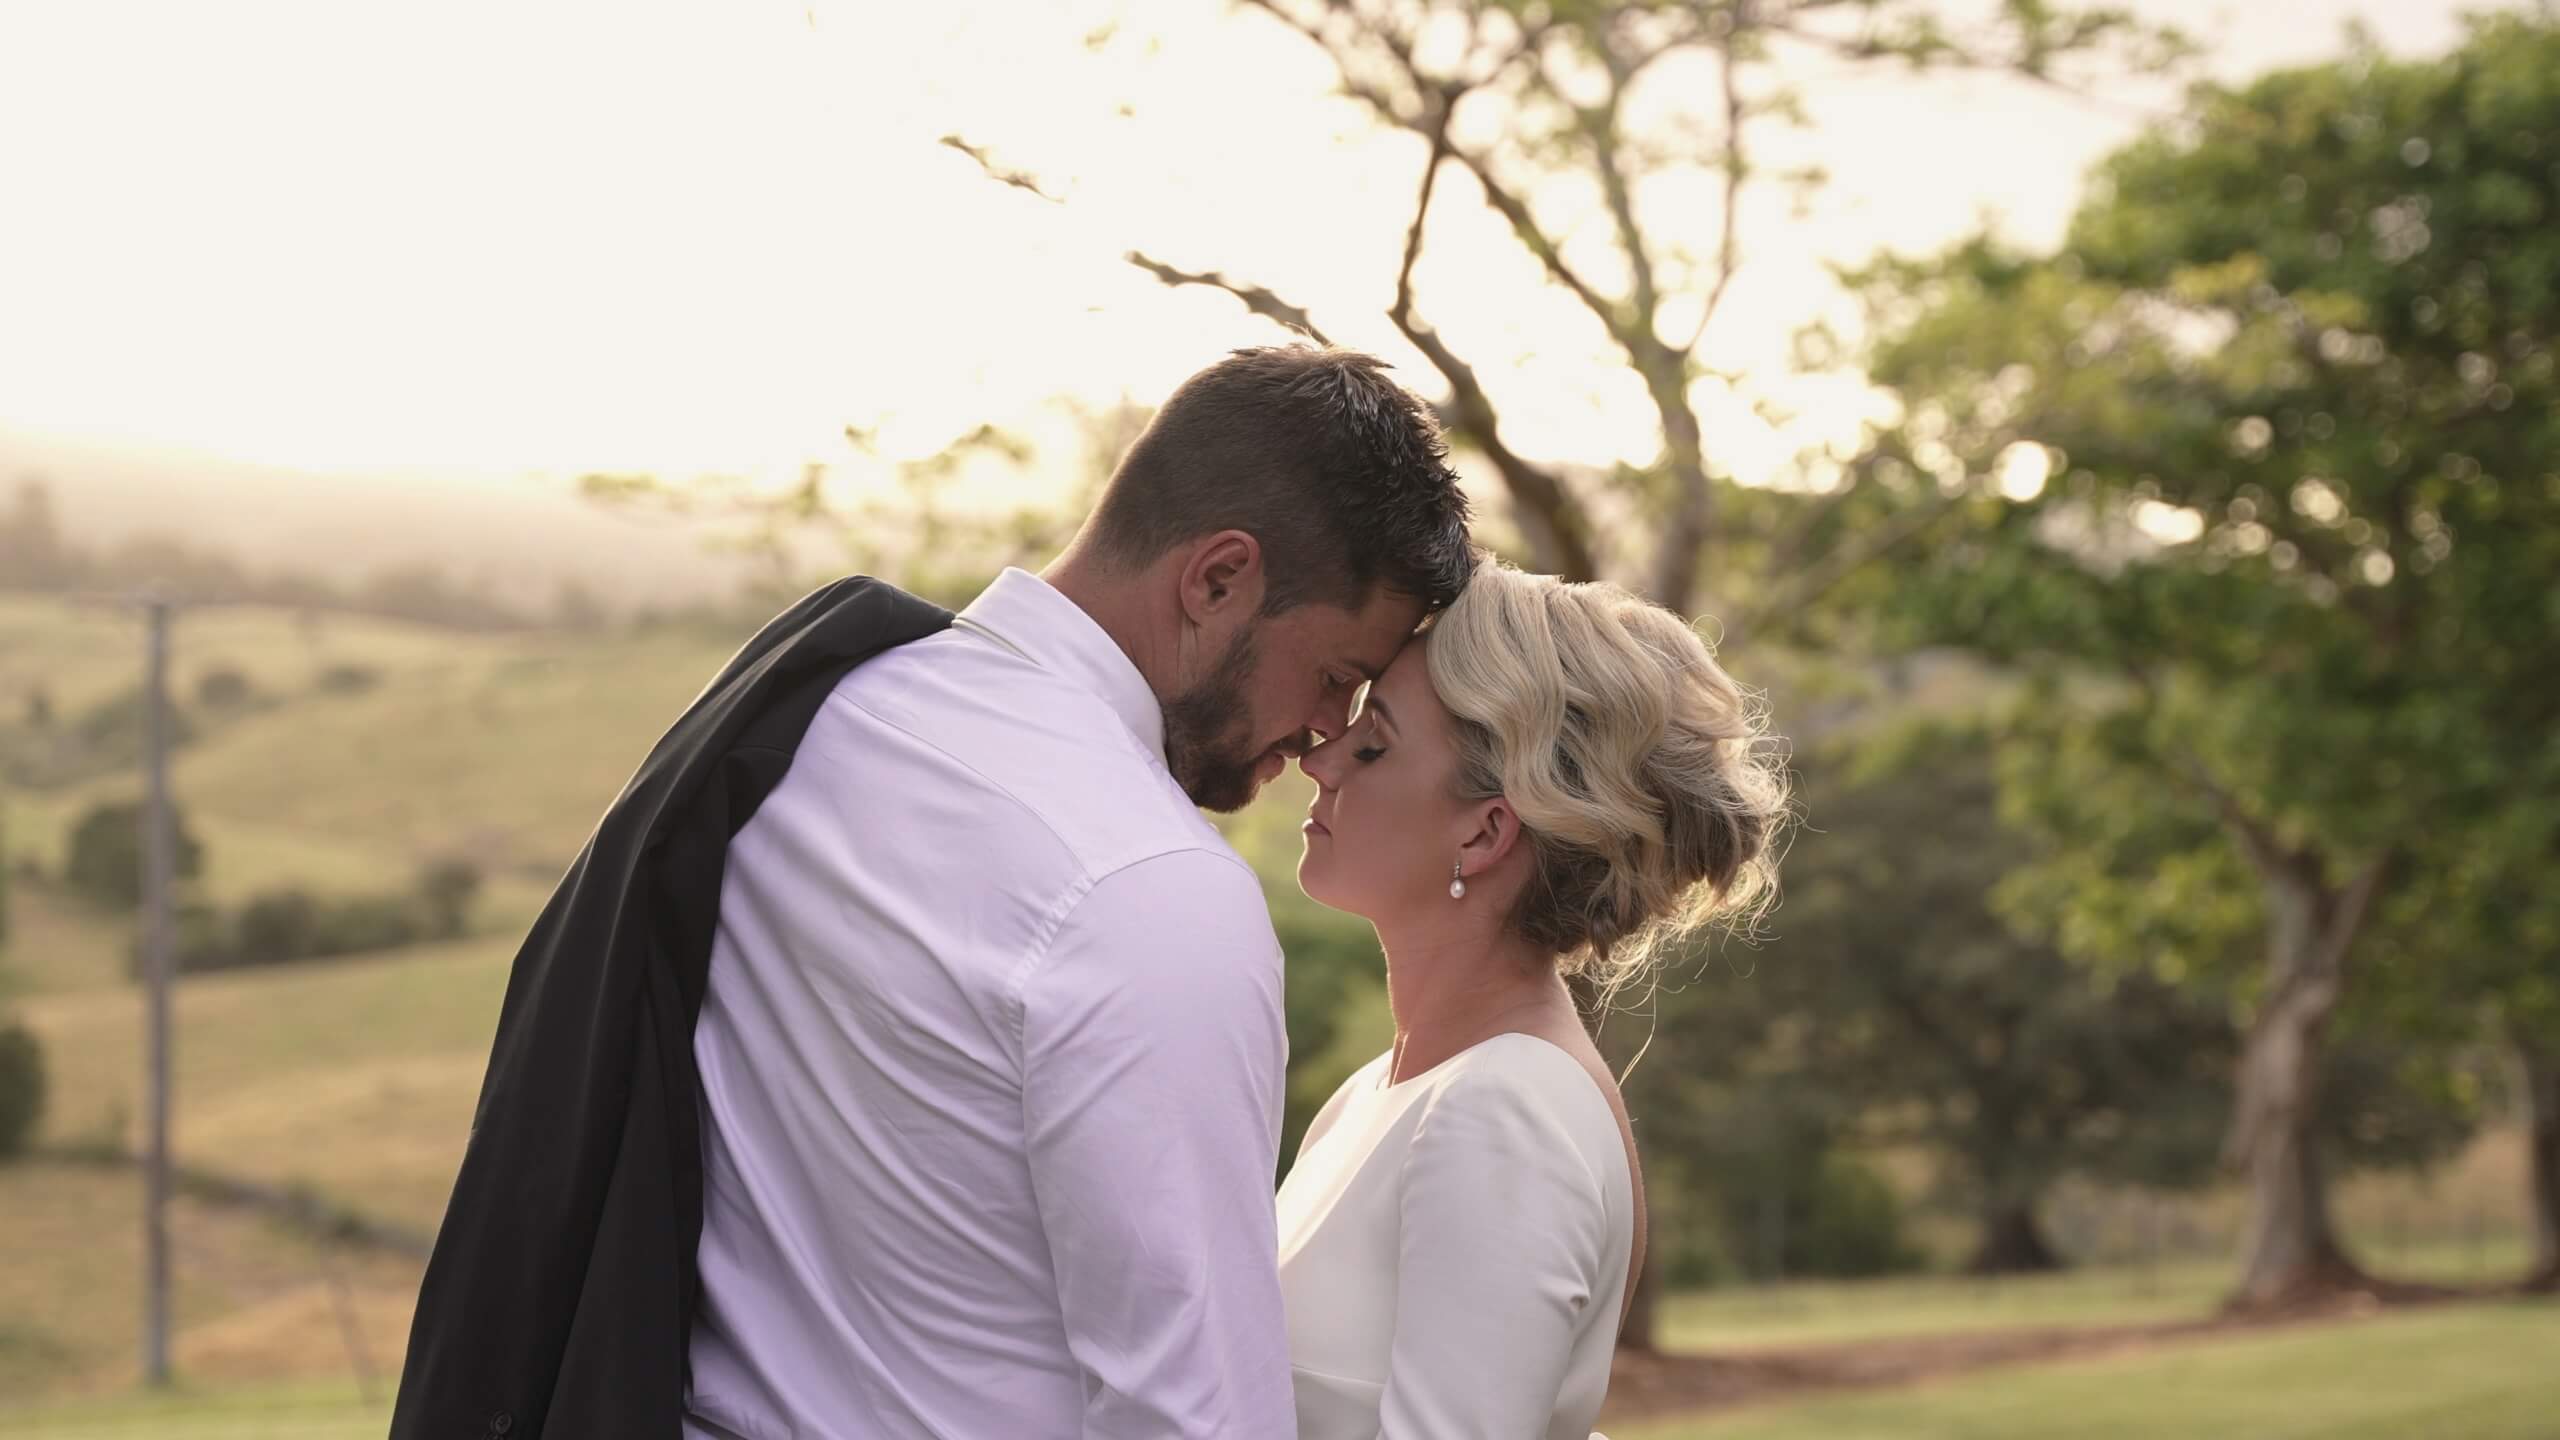 Natalie + Deano Teaser Film // Greyleigh // Wollongong Wedding Videography